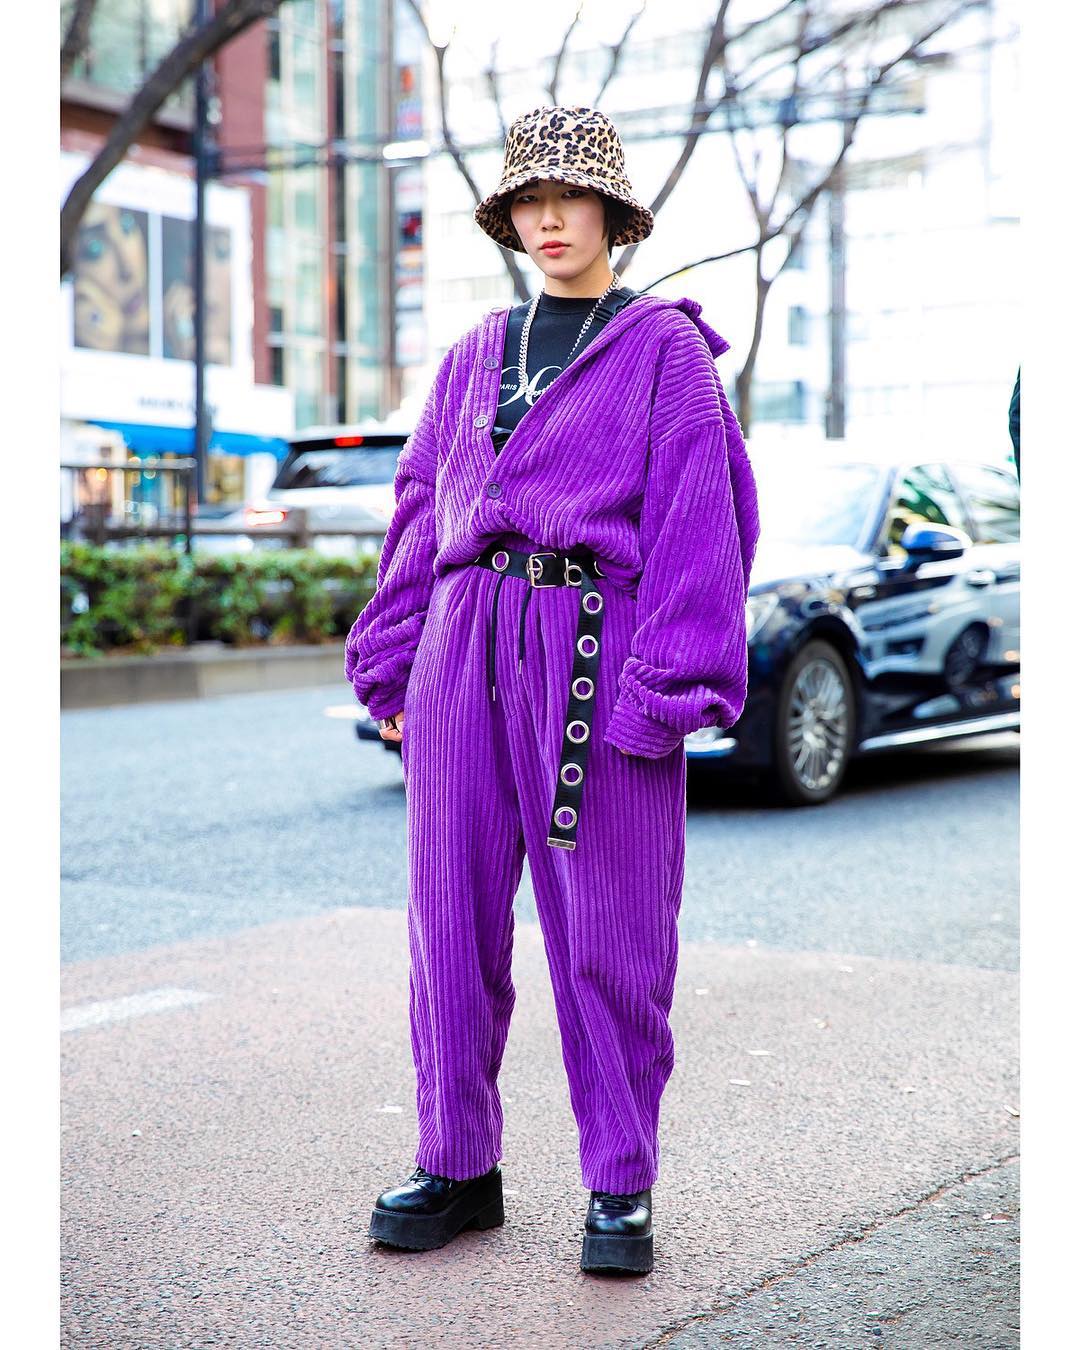 Tokyo Fashion 16 Year Old Student Nanami Shxxbi 153cm On The